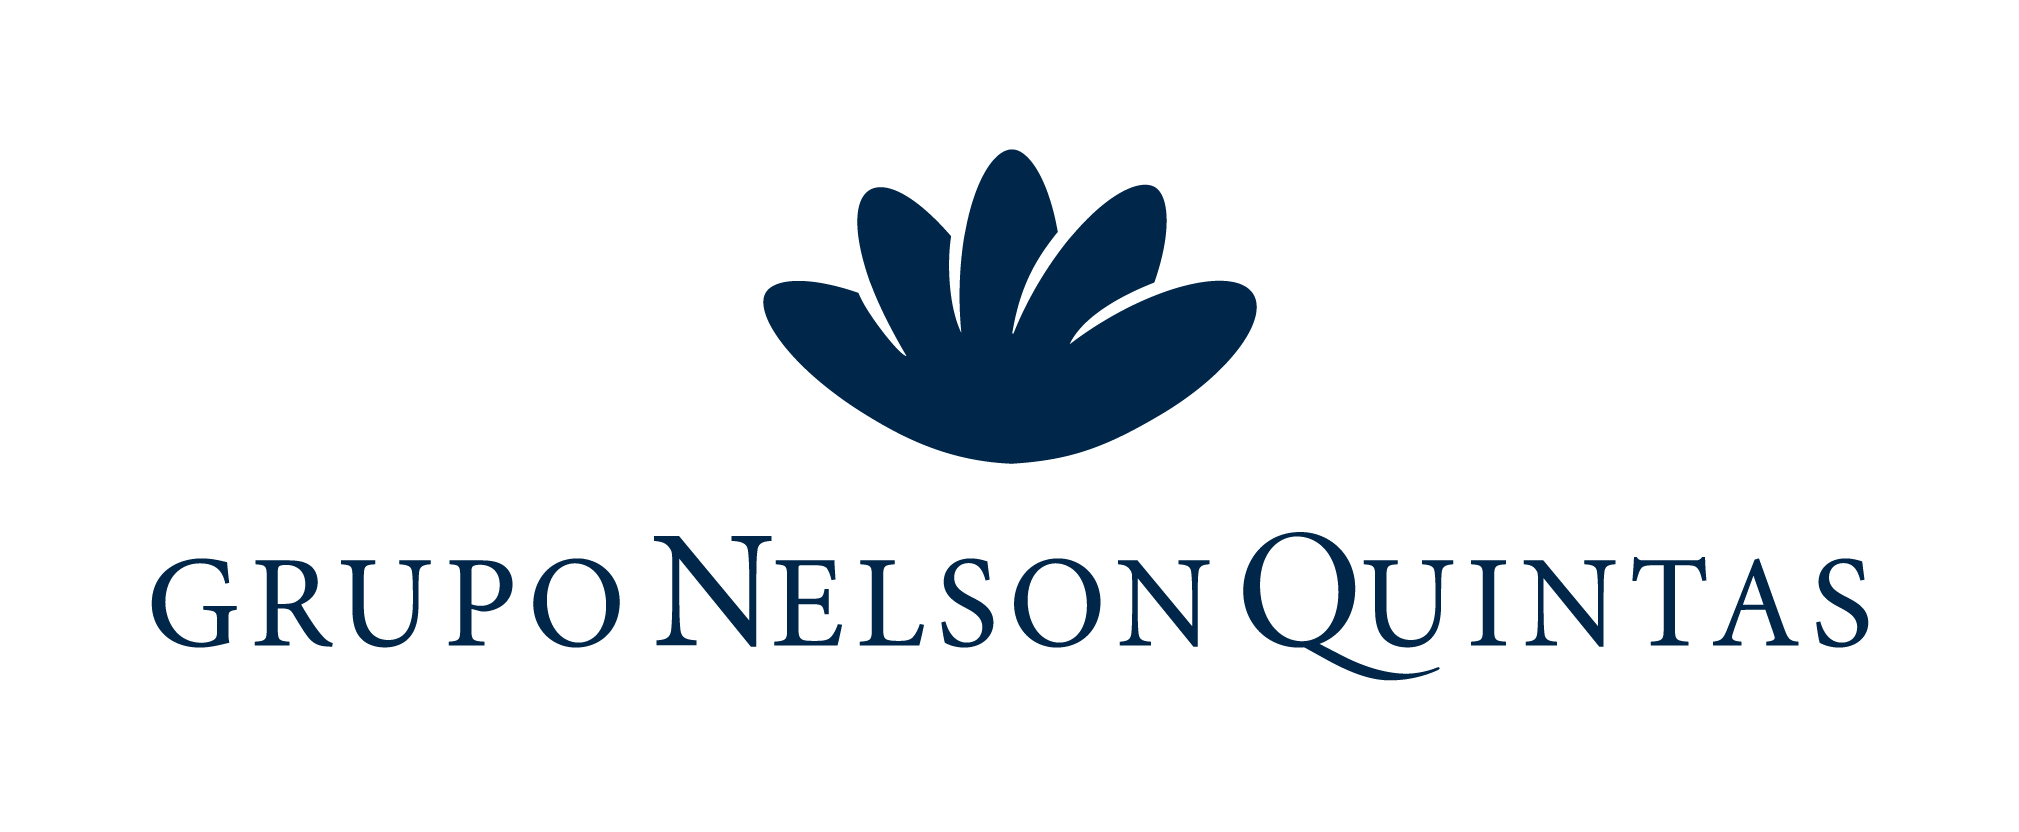 NELSON QUINTAS IMOBILIARIA SA logo